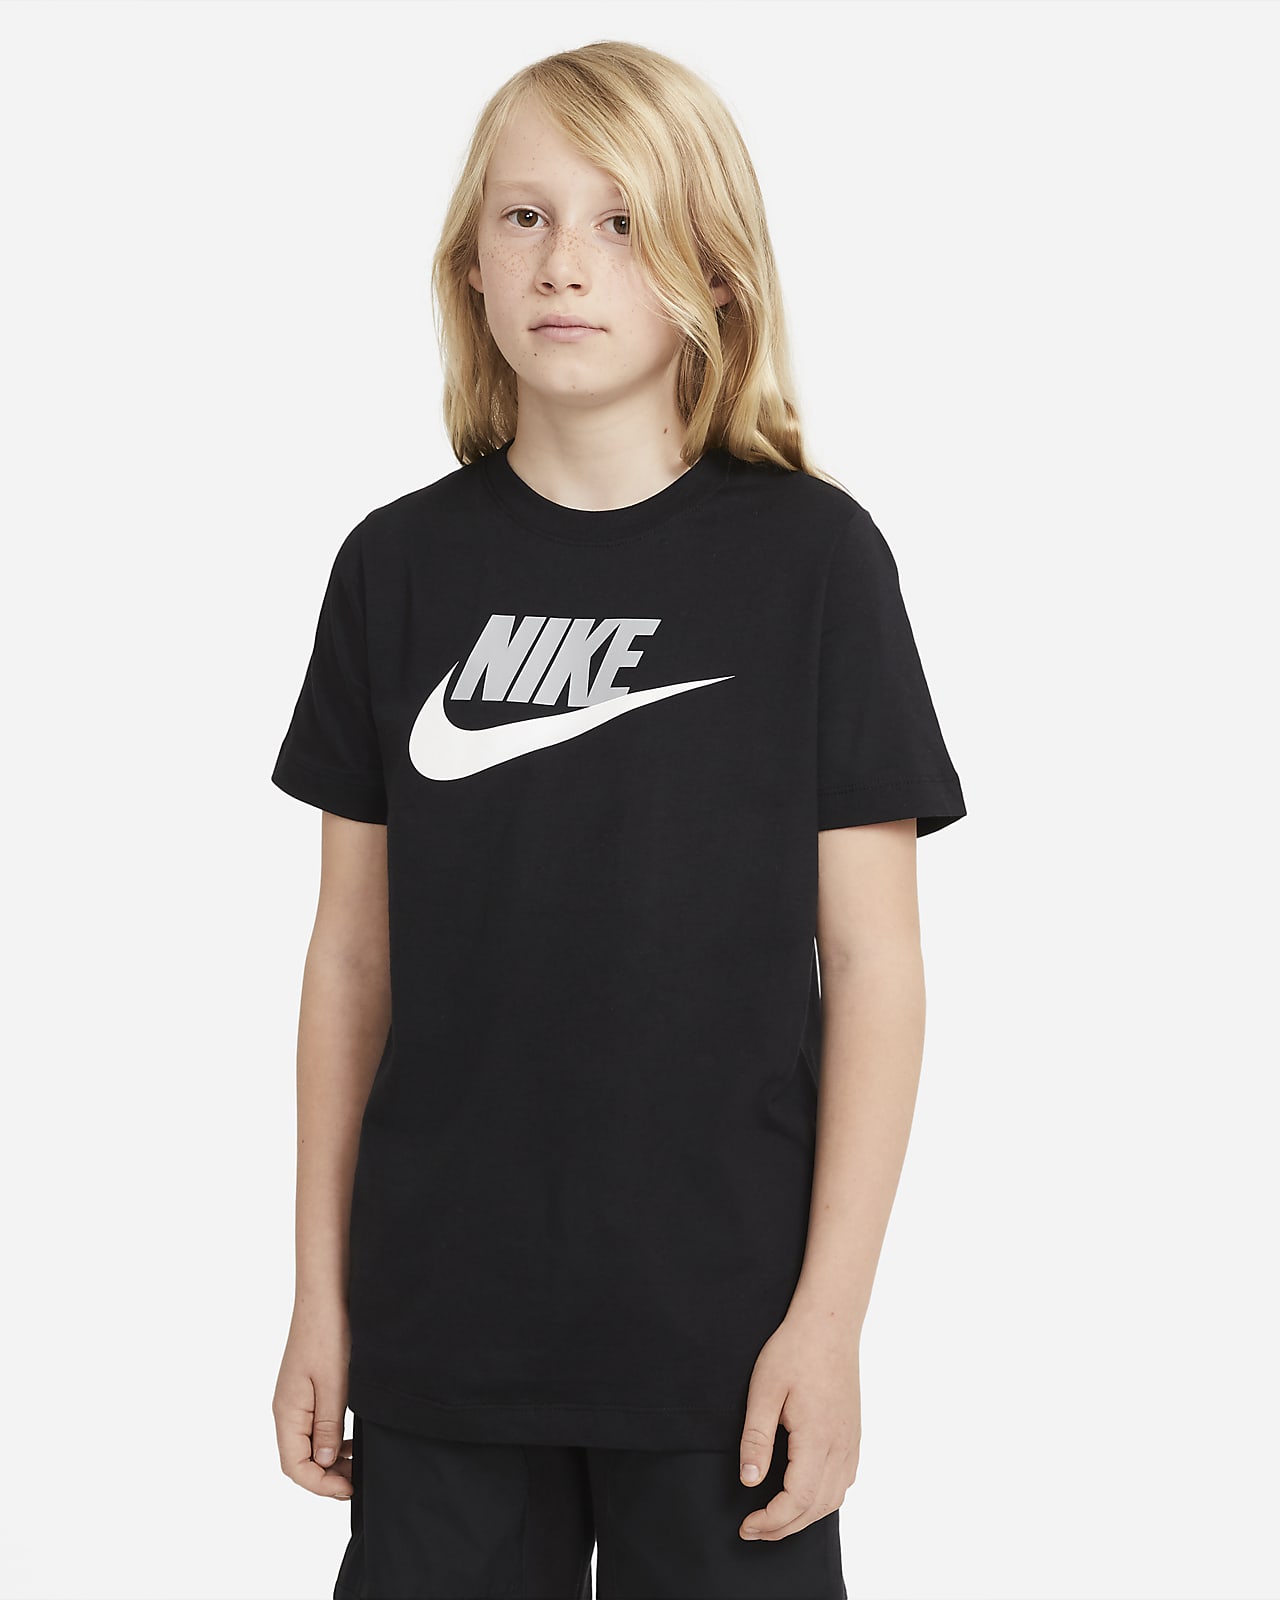 Trascender Carrera Aprendizaje Playera de algodón para niños talla grande Nike Sportswear. Nike.com